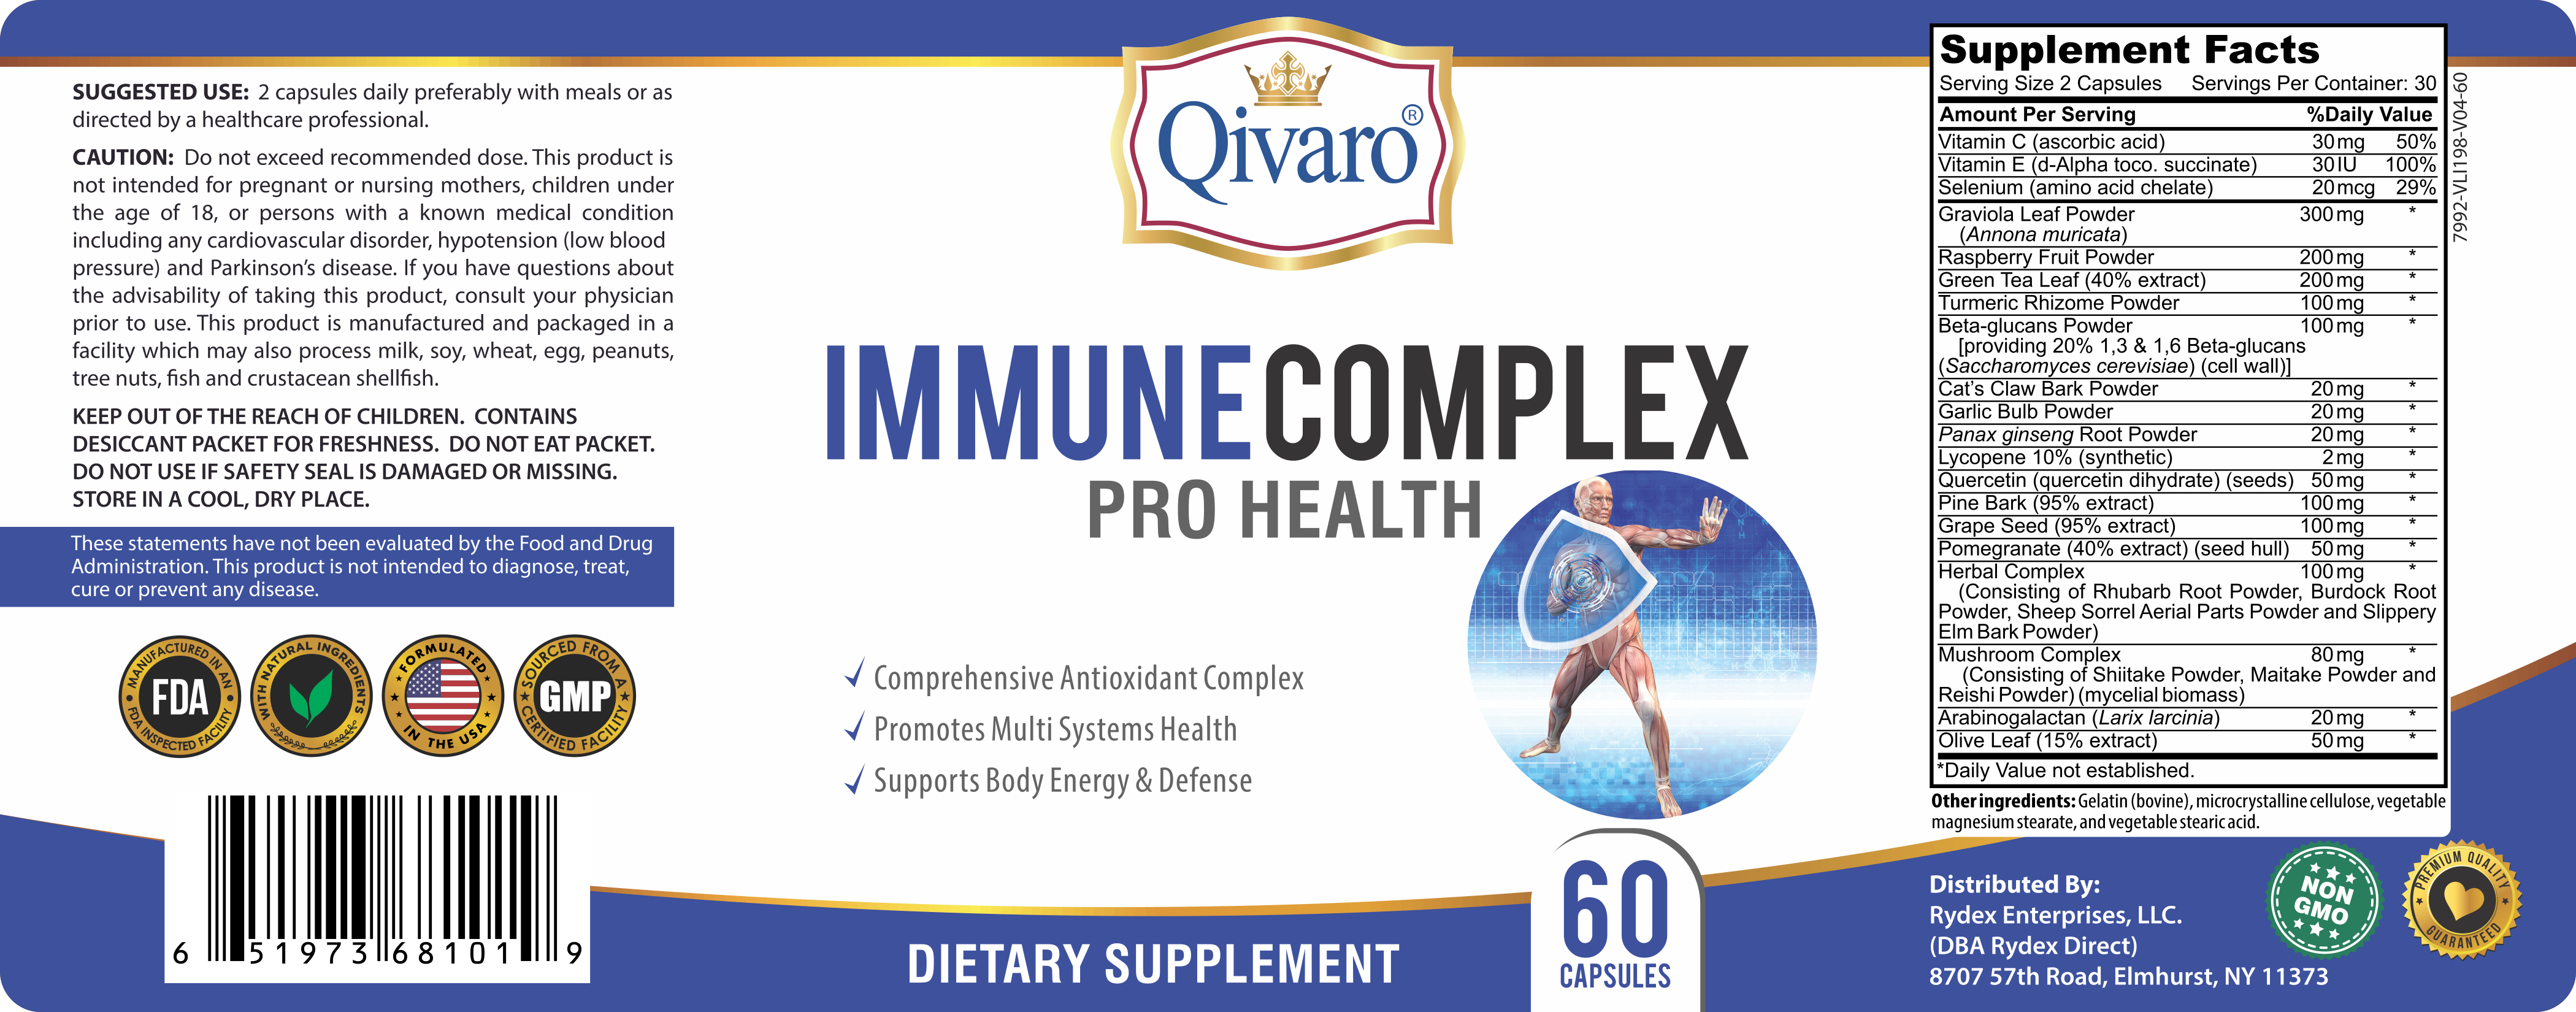 SKU:QIH05-Immune Complex Pro Health